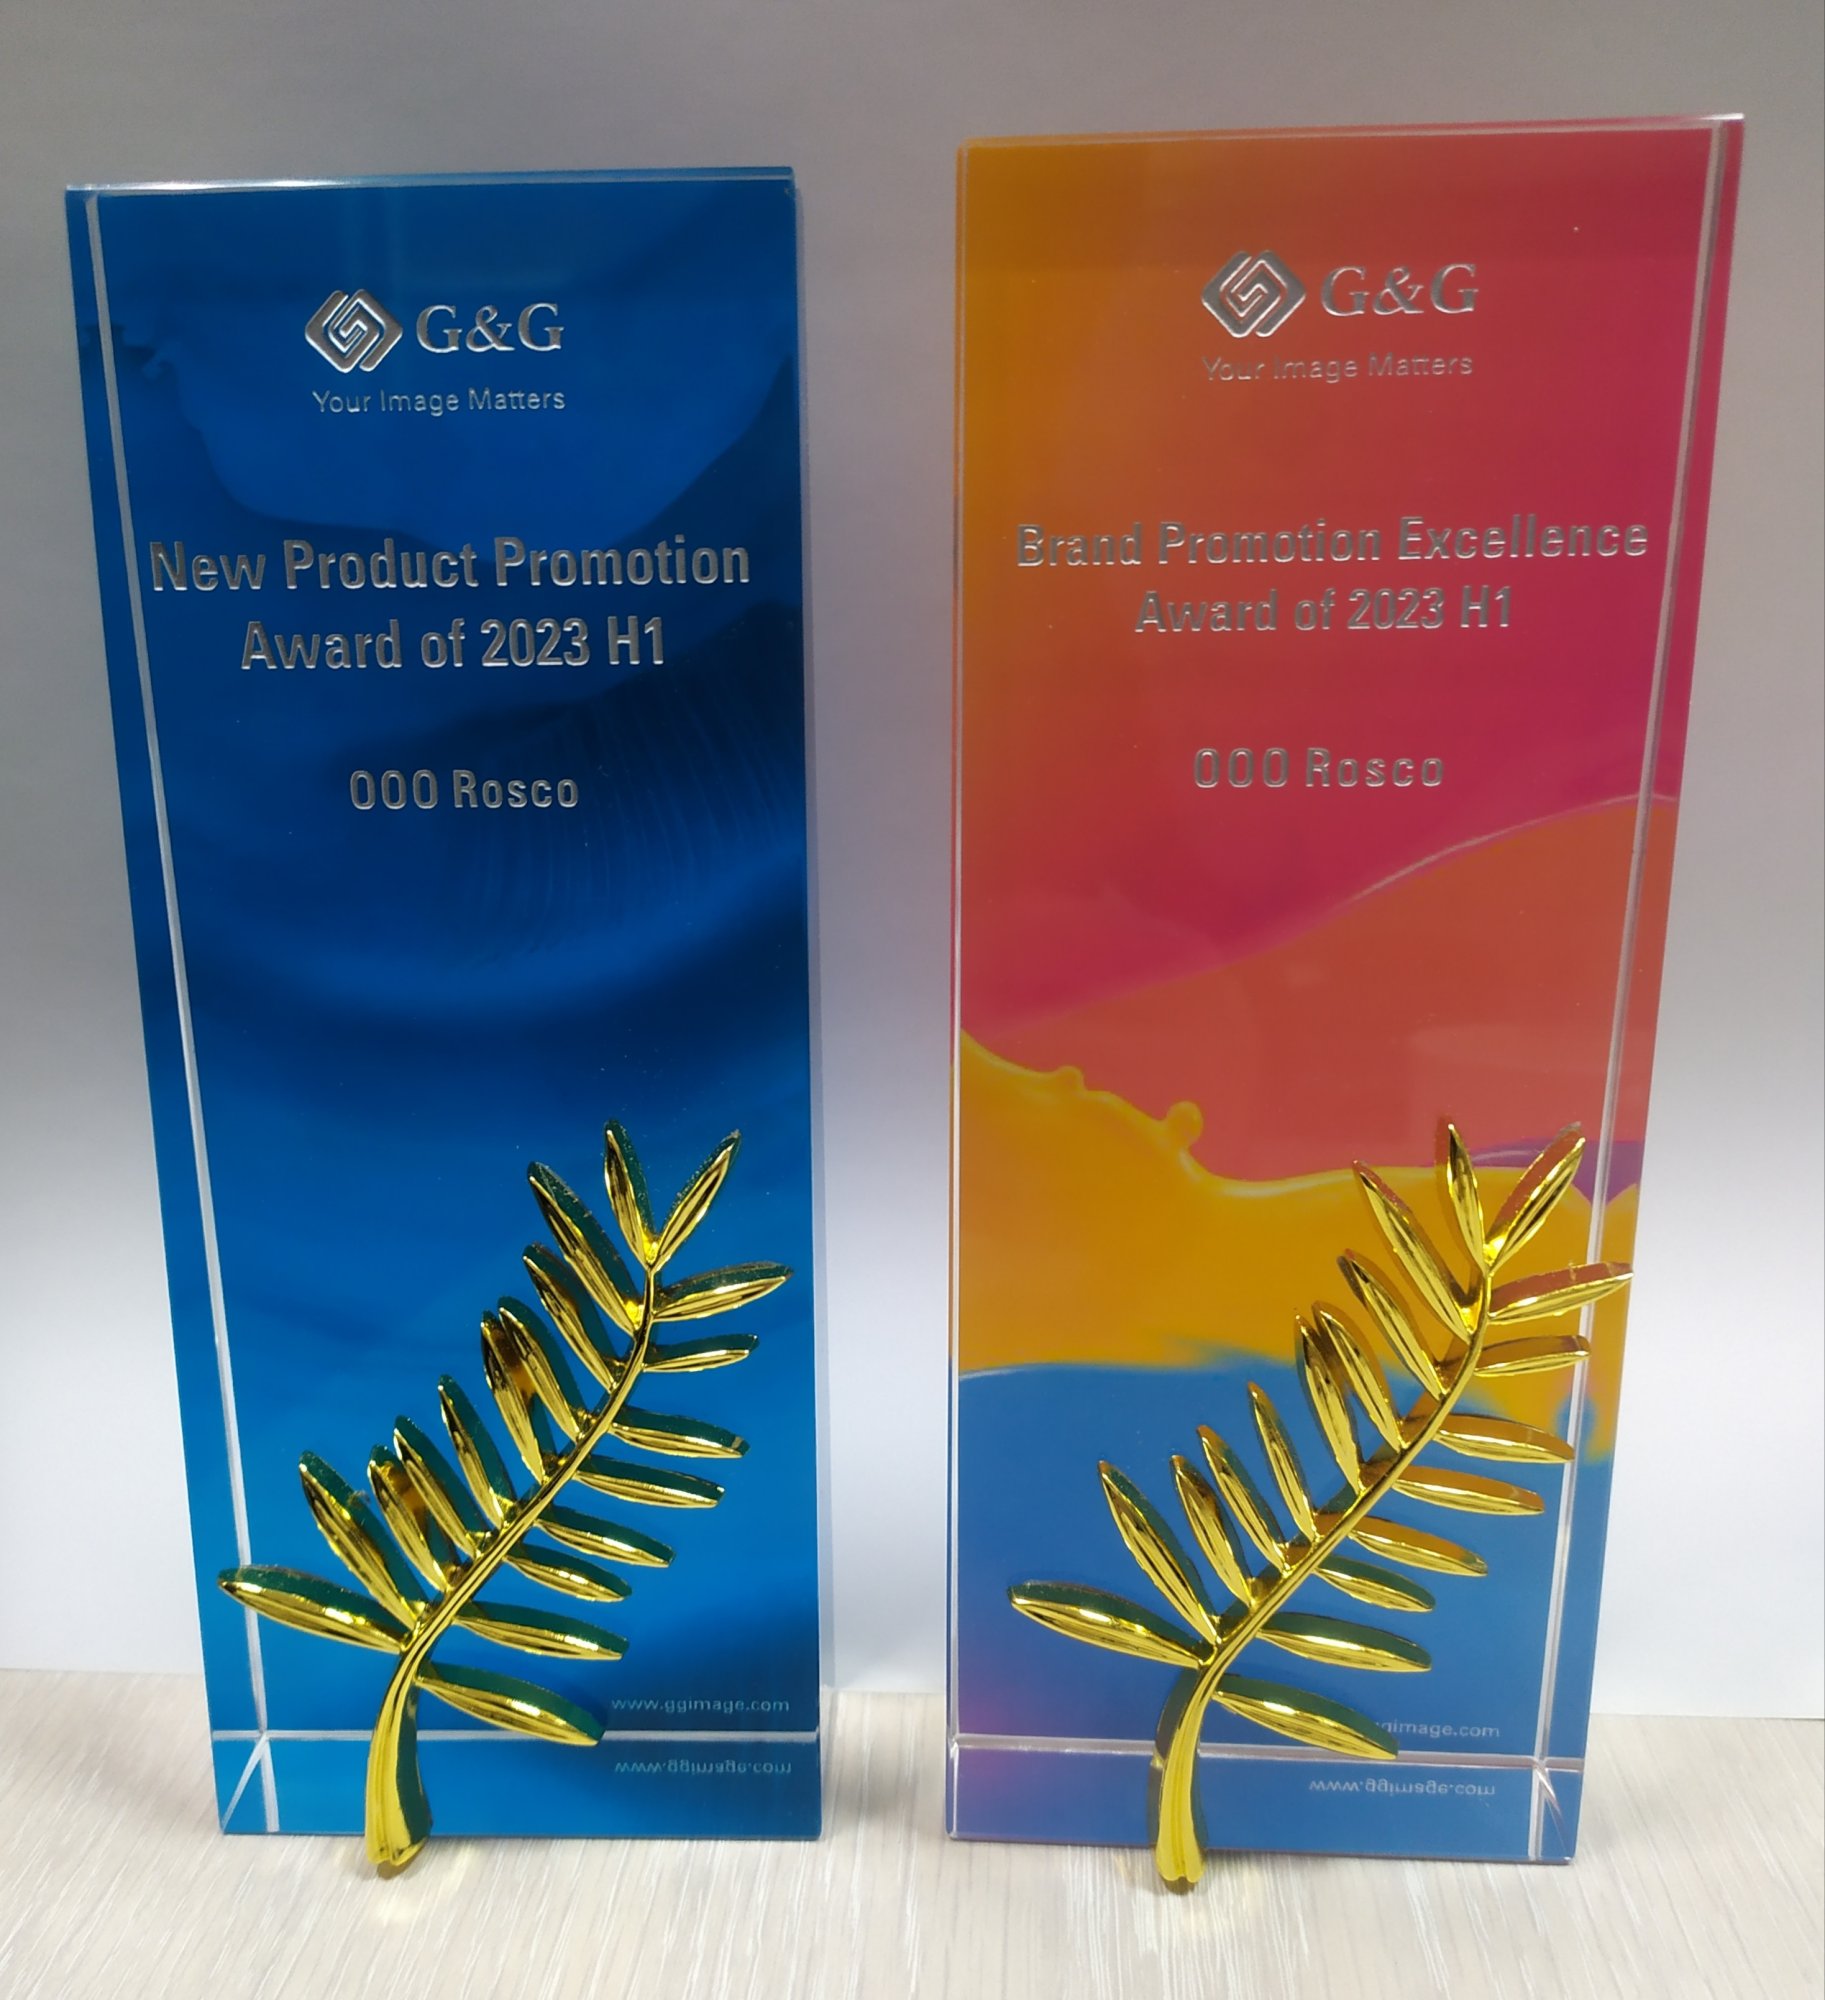 РОСКО получает награды G&G - Brand Promotion Excellence Award и New Product Promotion Award!